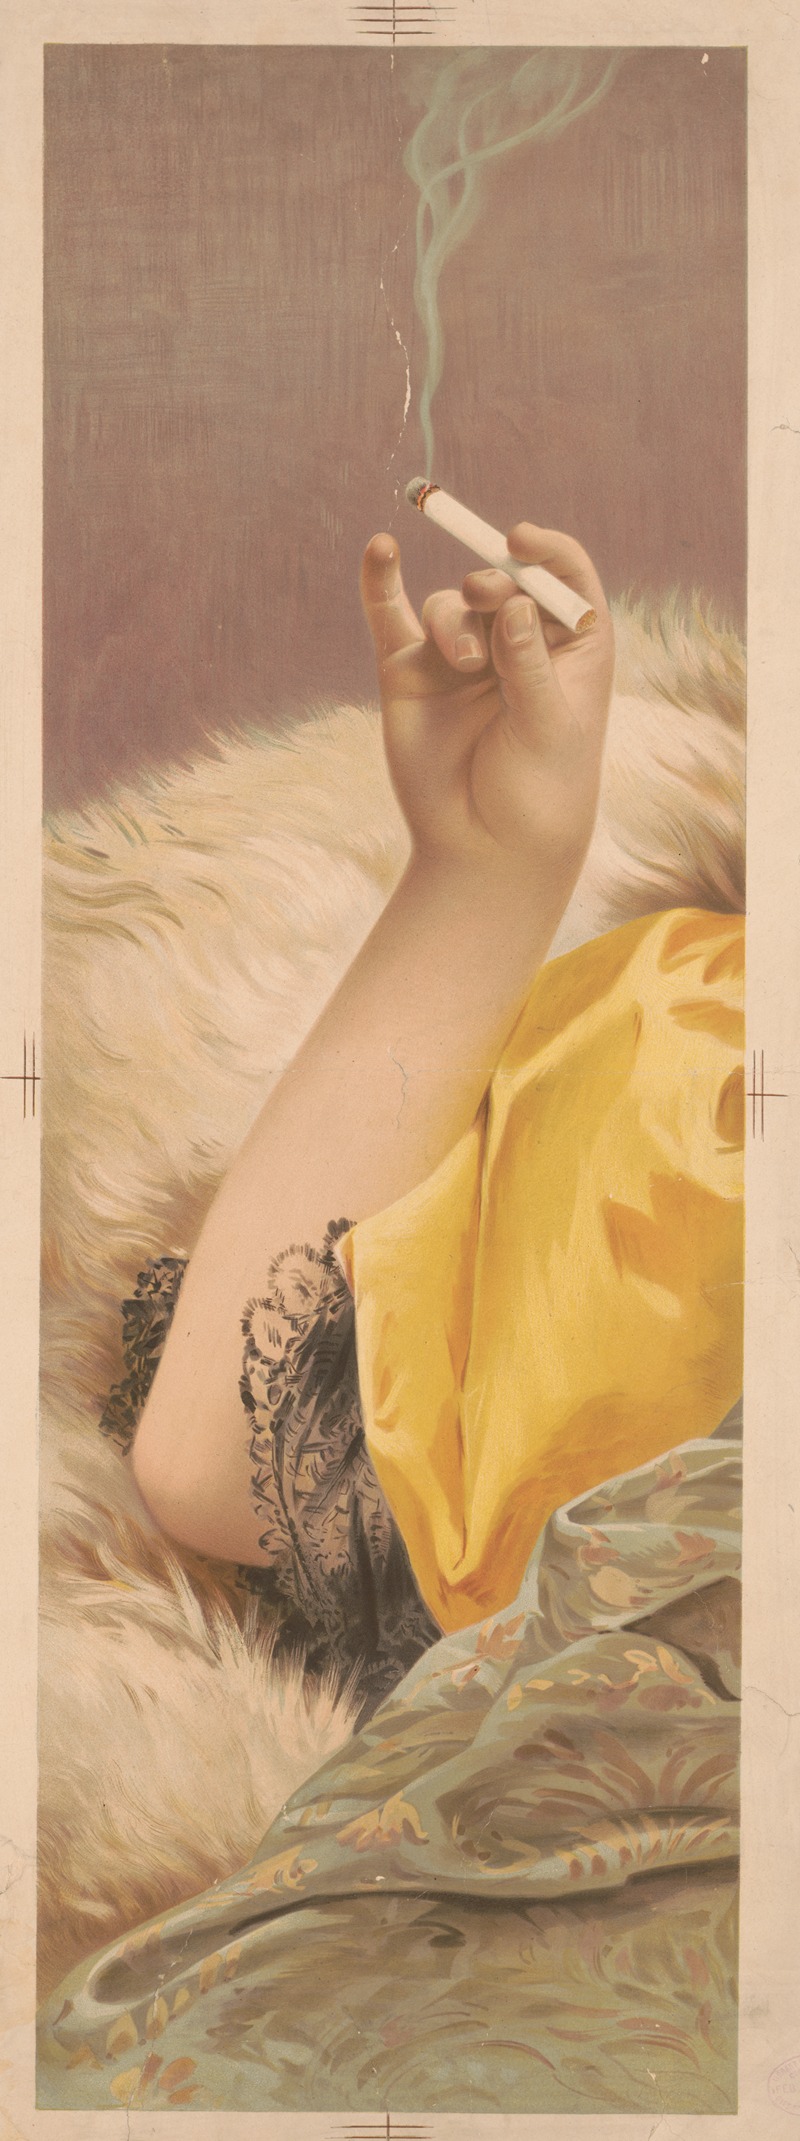 Sackett & Wilhelms Co. - Arm of woman holding a lit cigarette